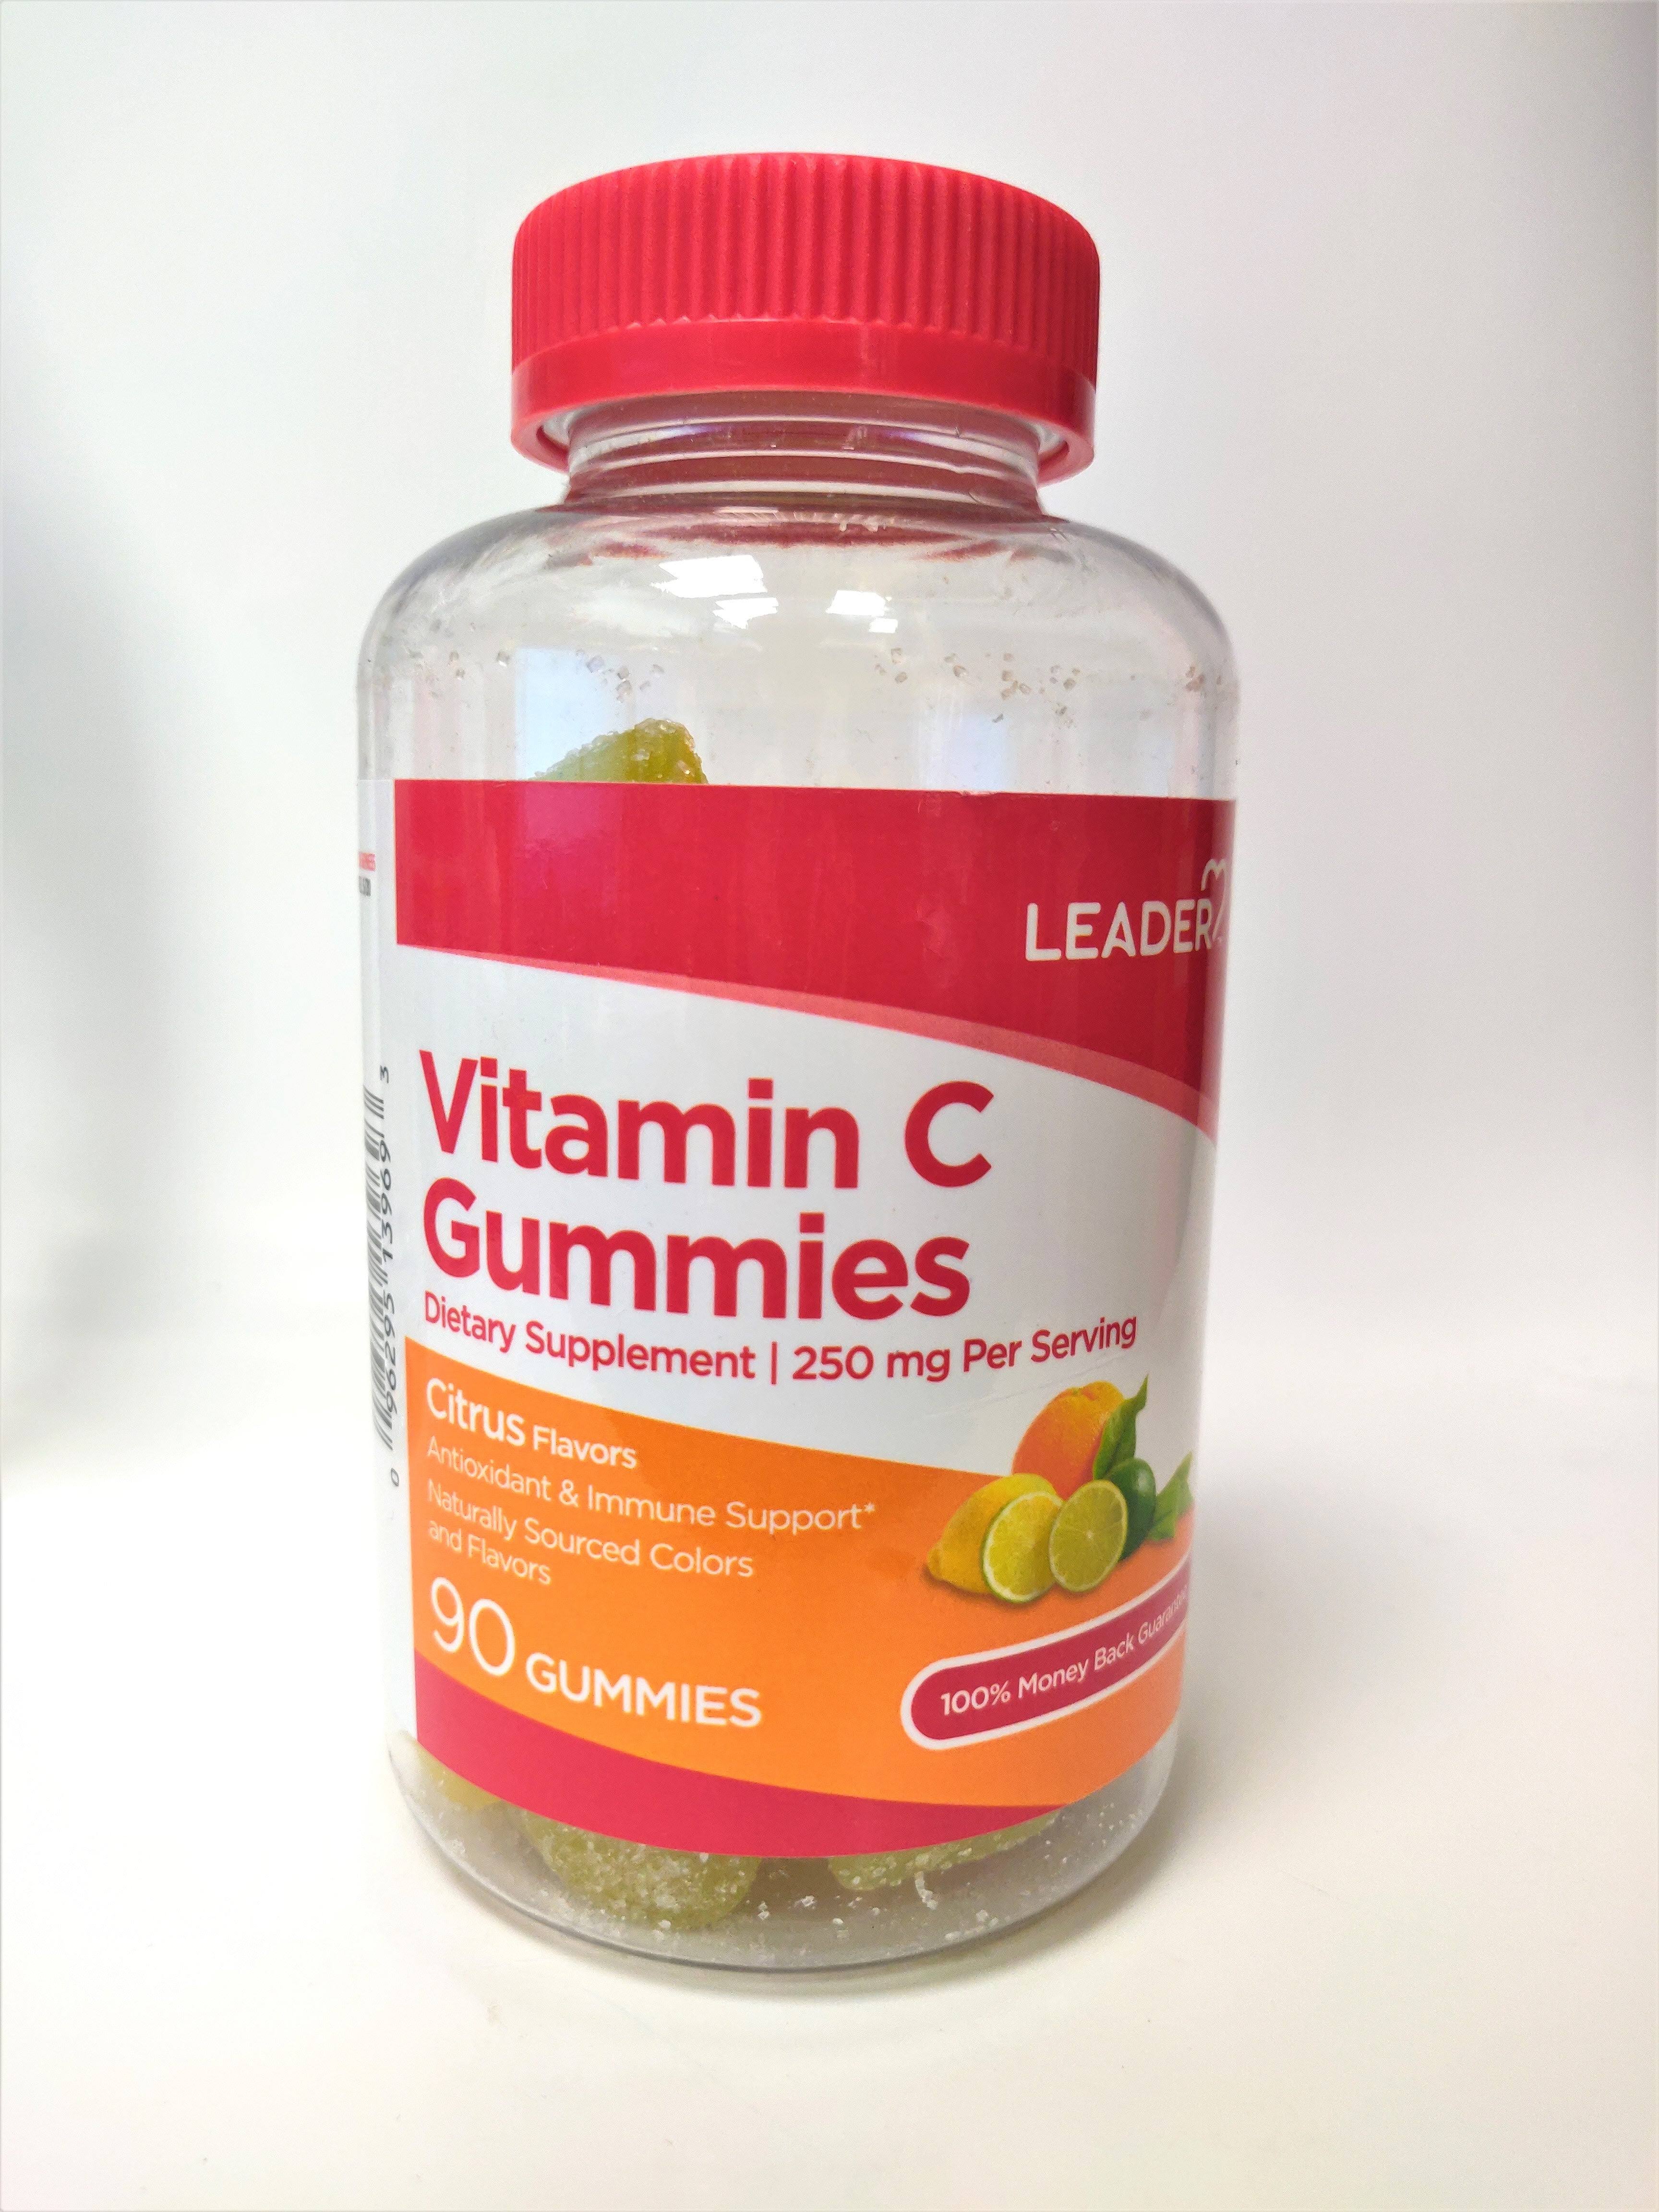 Leader Vitamin C Dietary Supplement Gummies - Citrus Flavor - 90 ct Gummies